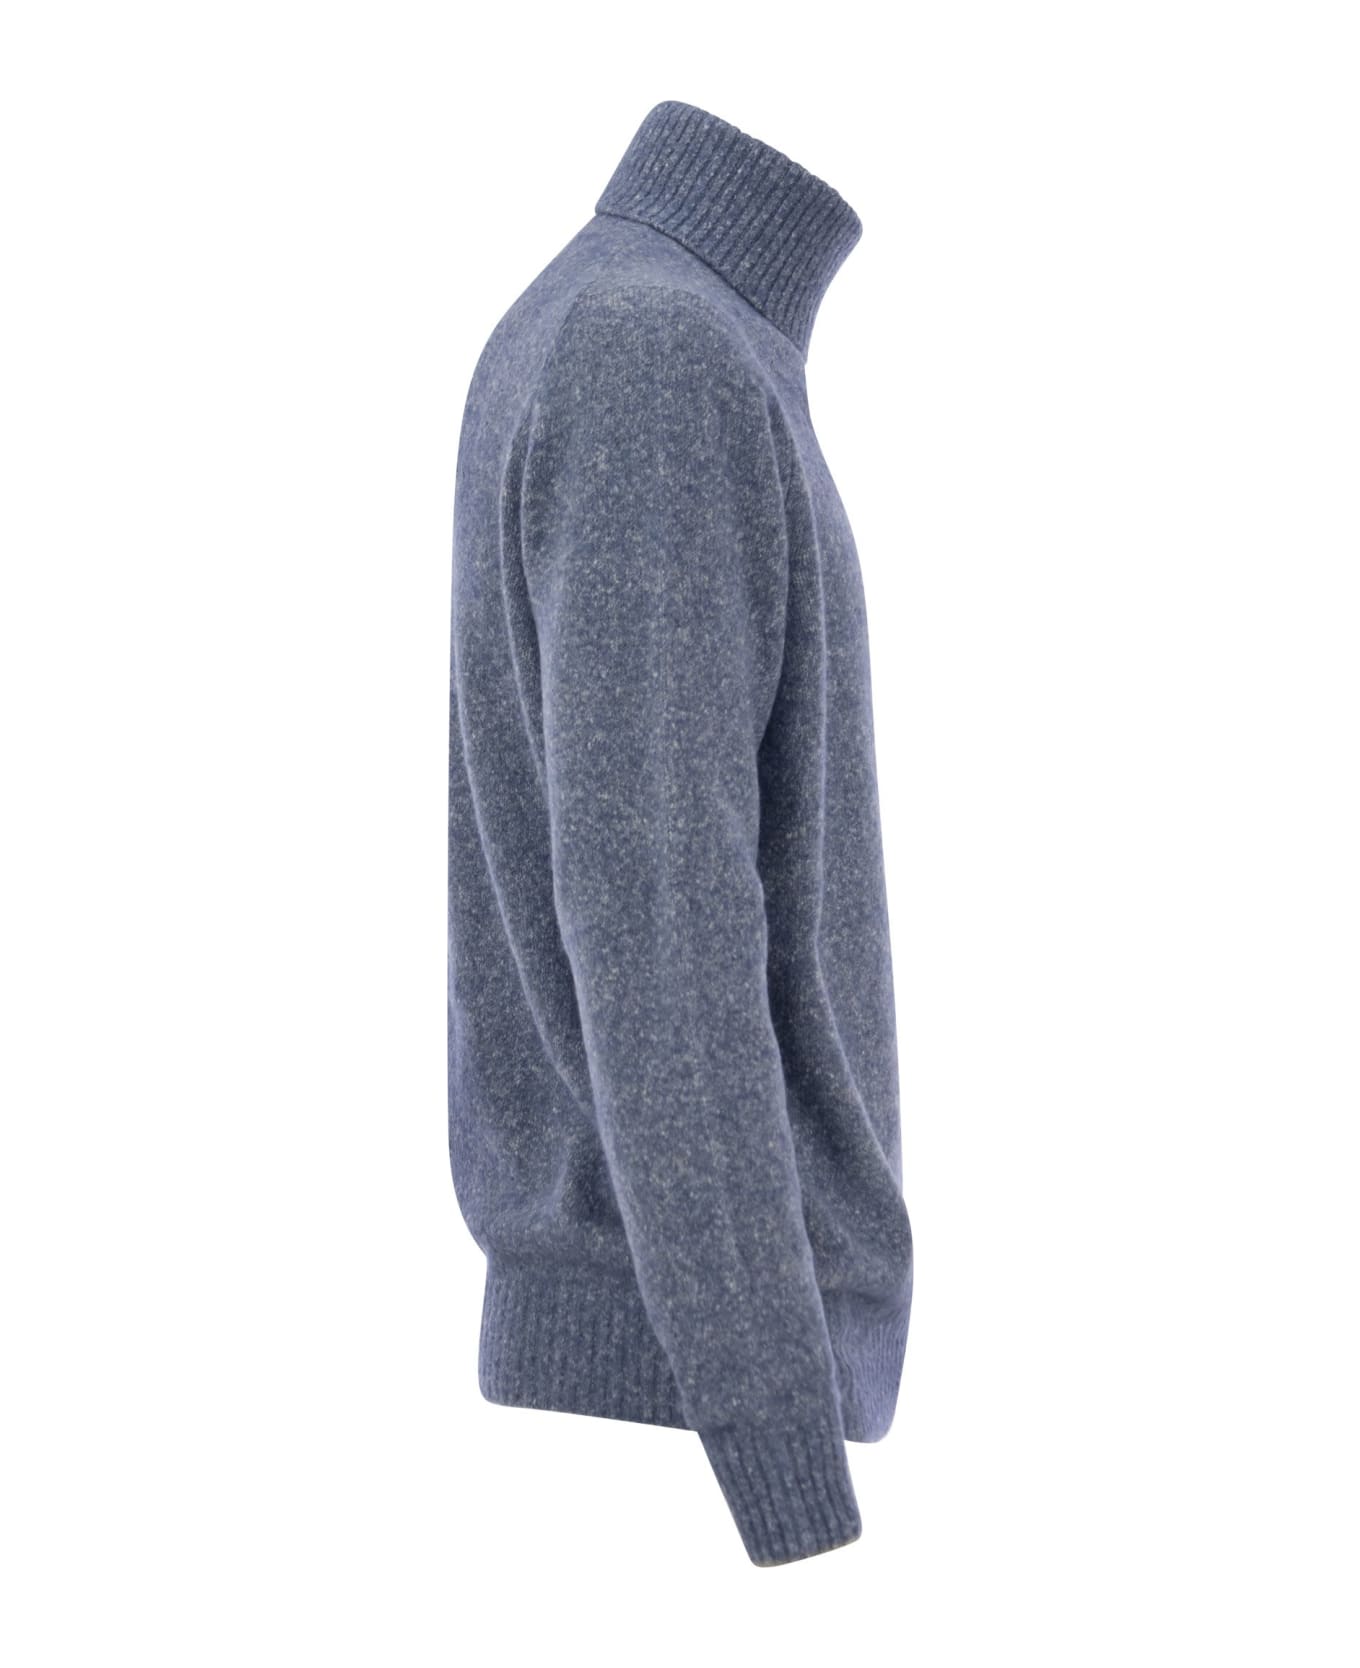 Brunello Cucinelli Turtleneck Sweater In Alpaca, Cotton And Wool - Light Blue ニットウェア